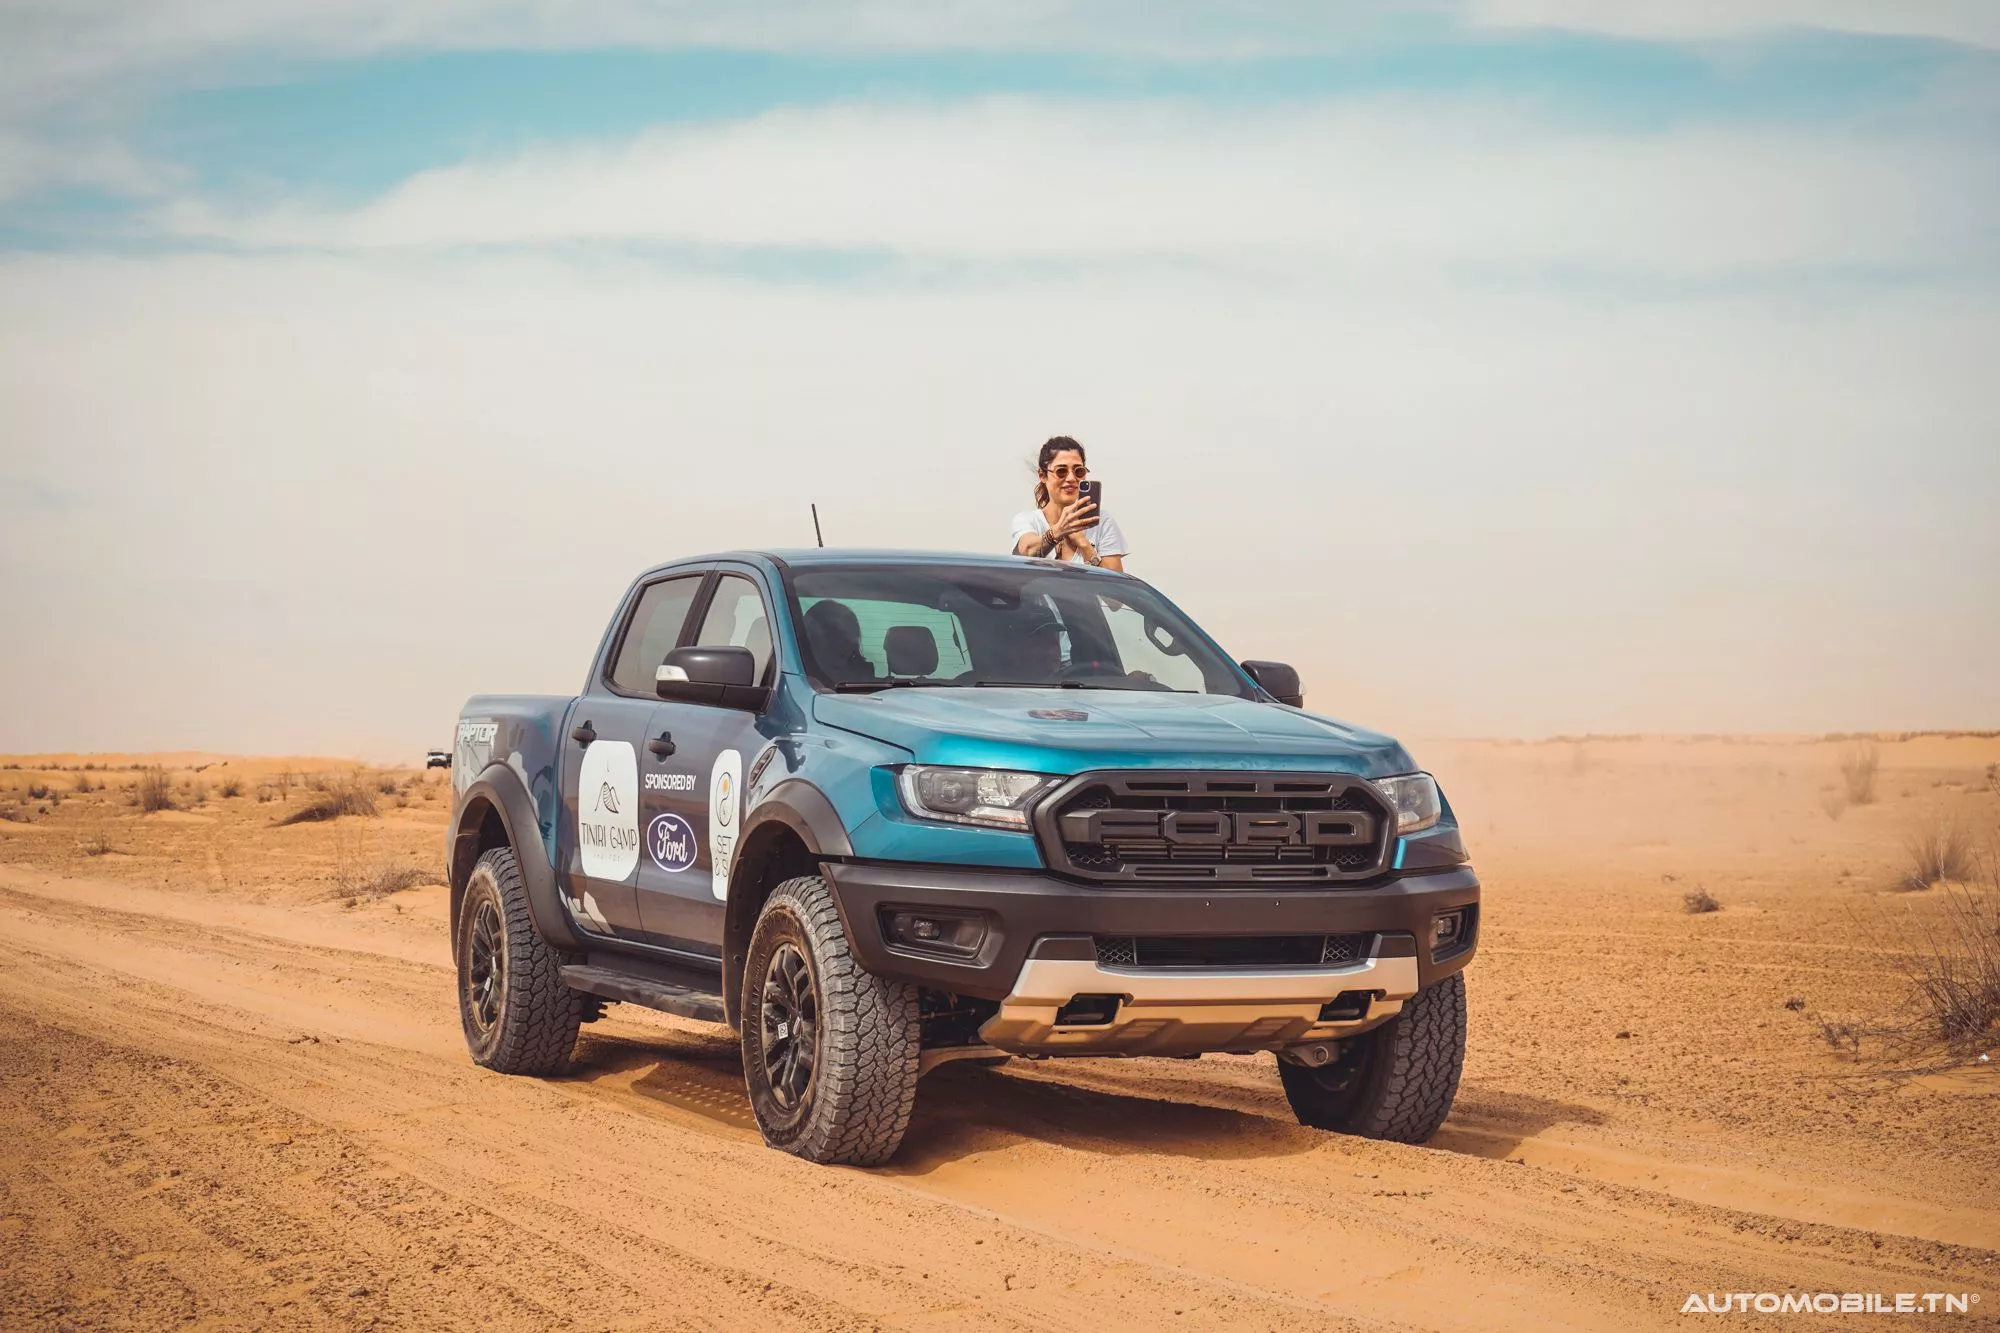 Ford Ranger Raptor - La star du Set & Sun Sahara Festival au